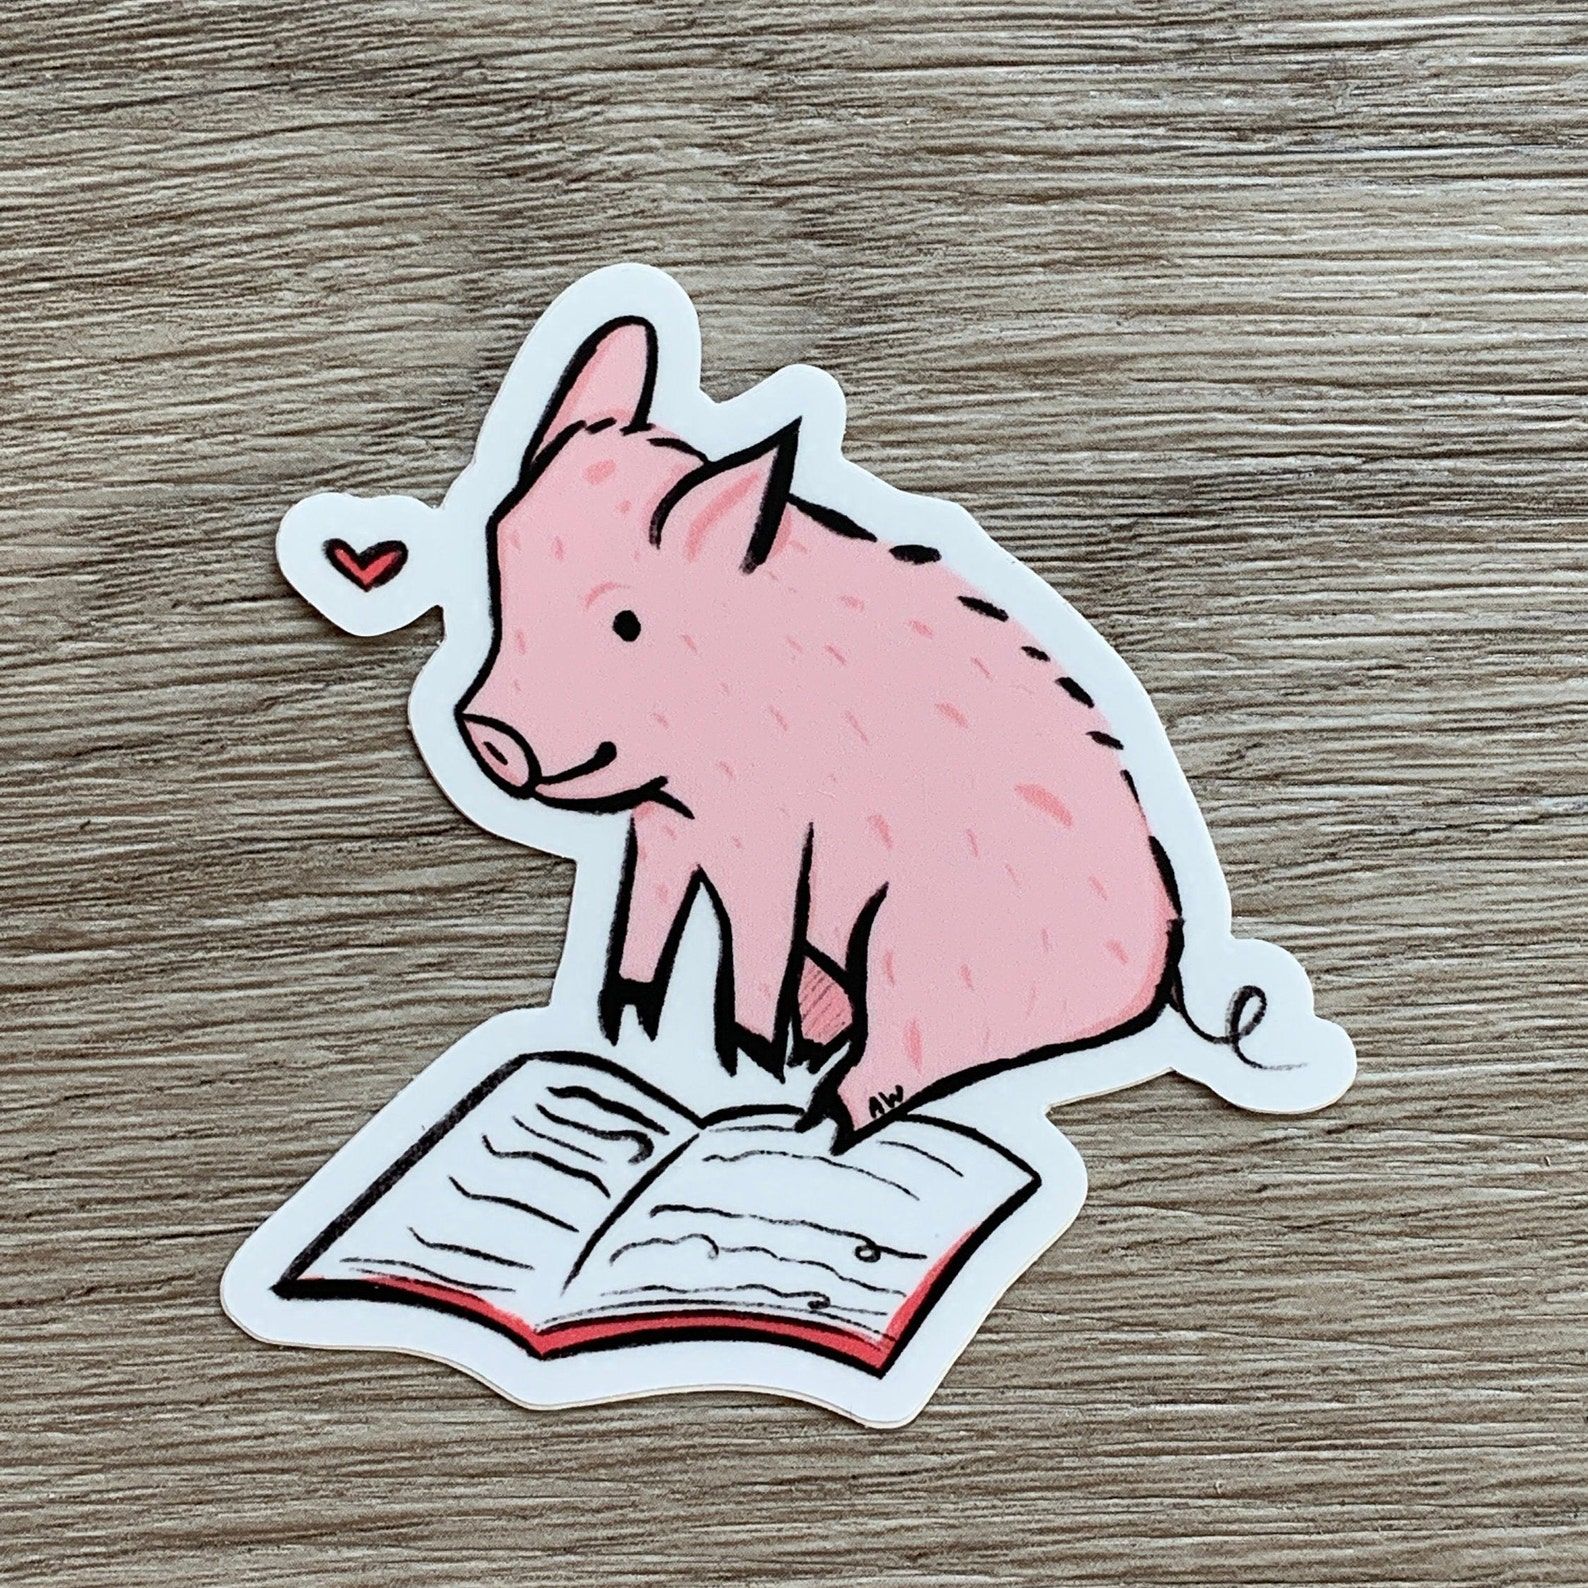 A sticker depicting a hand drawn pink pig reading an open book